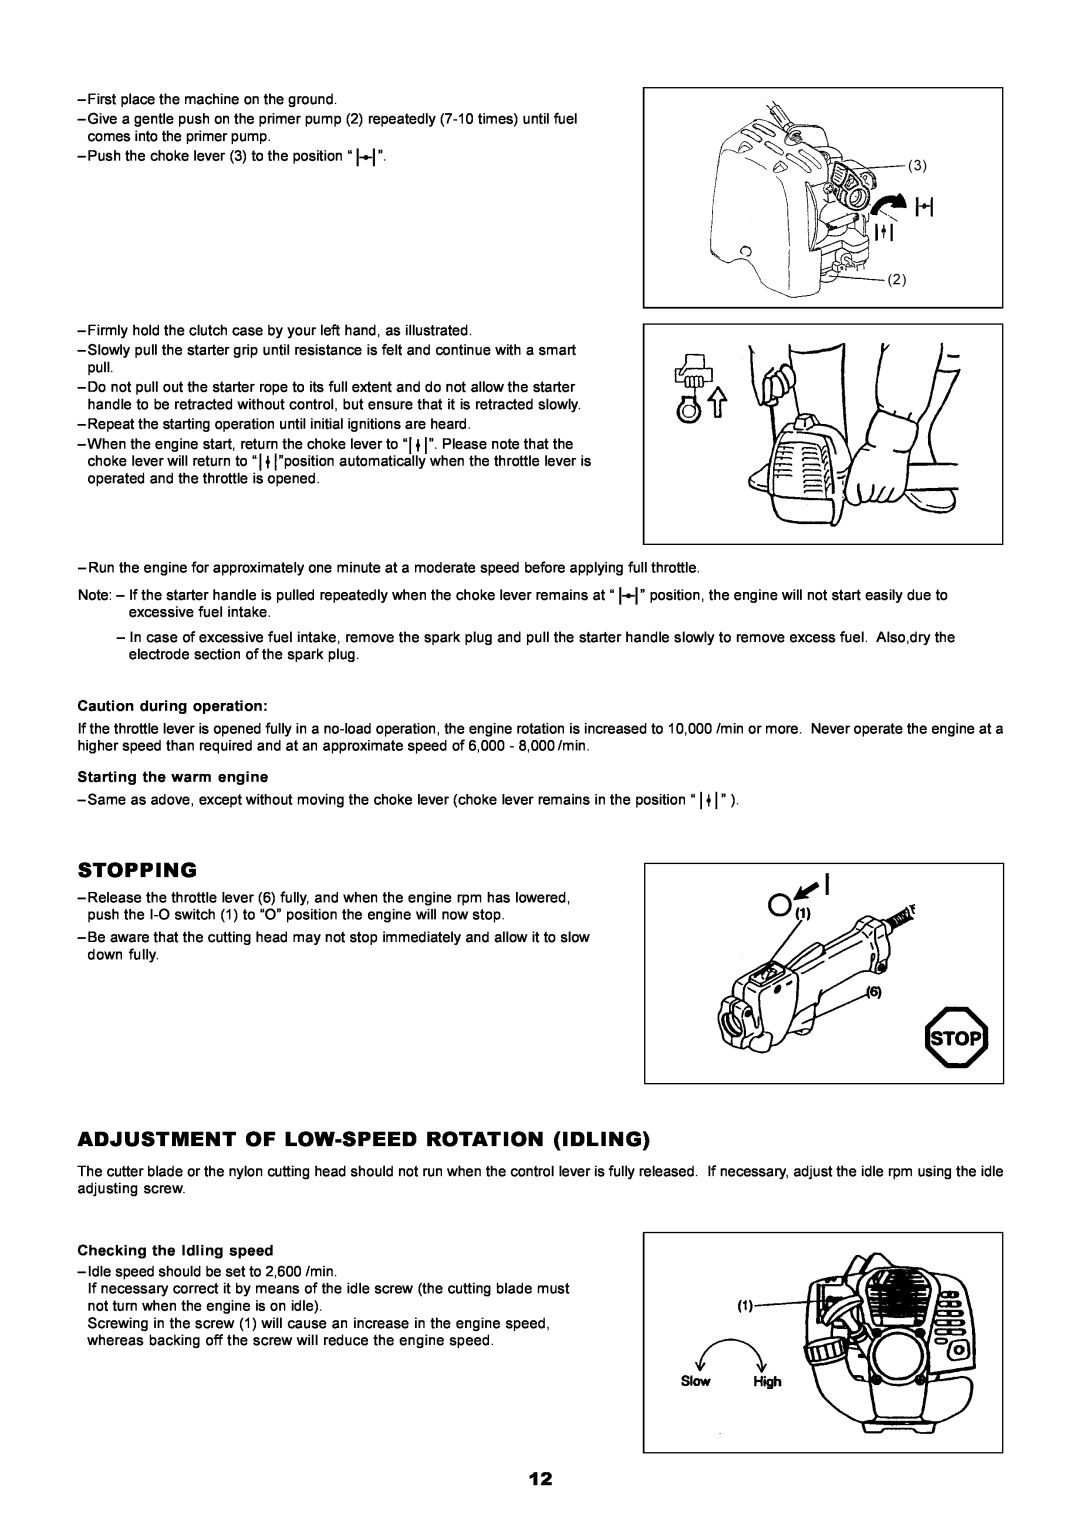 Dolmar PE-251 instruction manual Stopping, Adjustment Of Low-Speedrotation Idling 